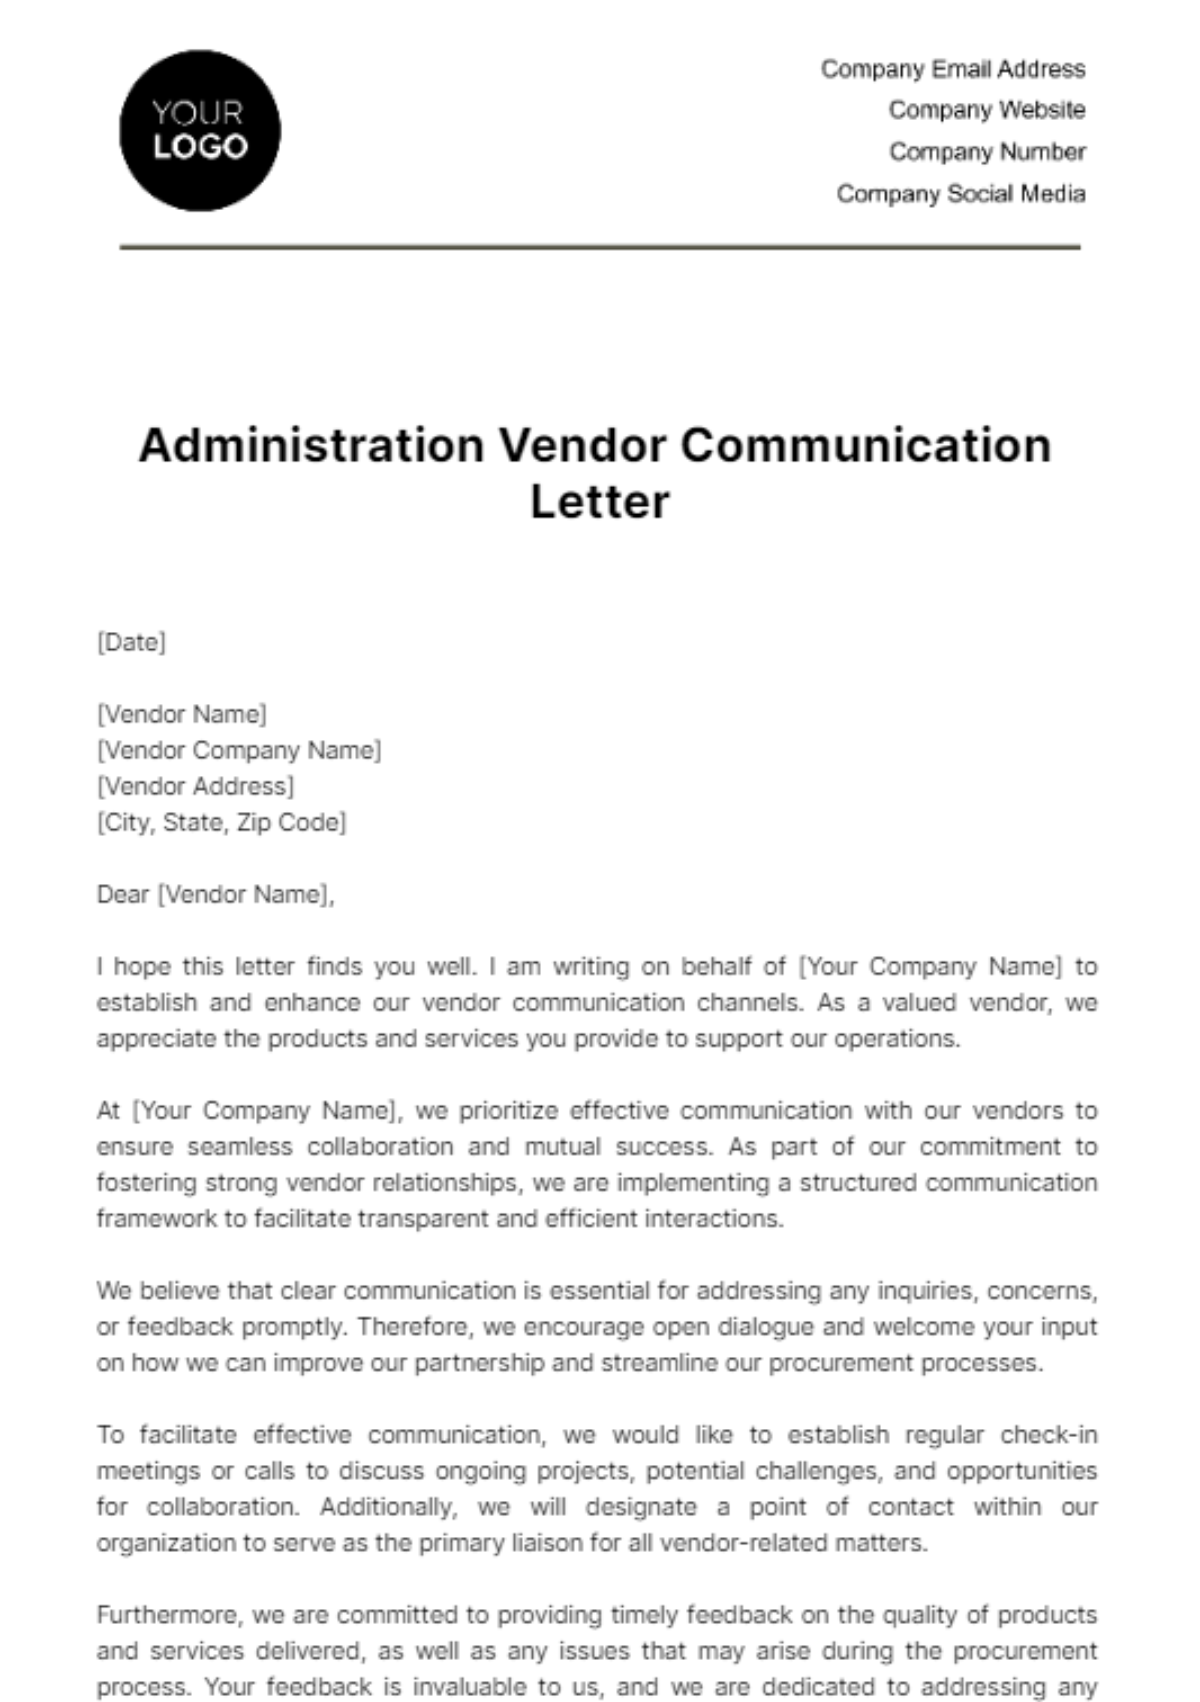 Administration Vendor Communication Letter Template